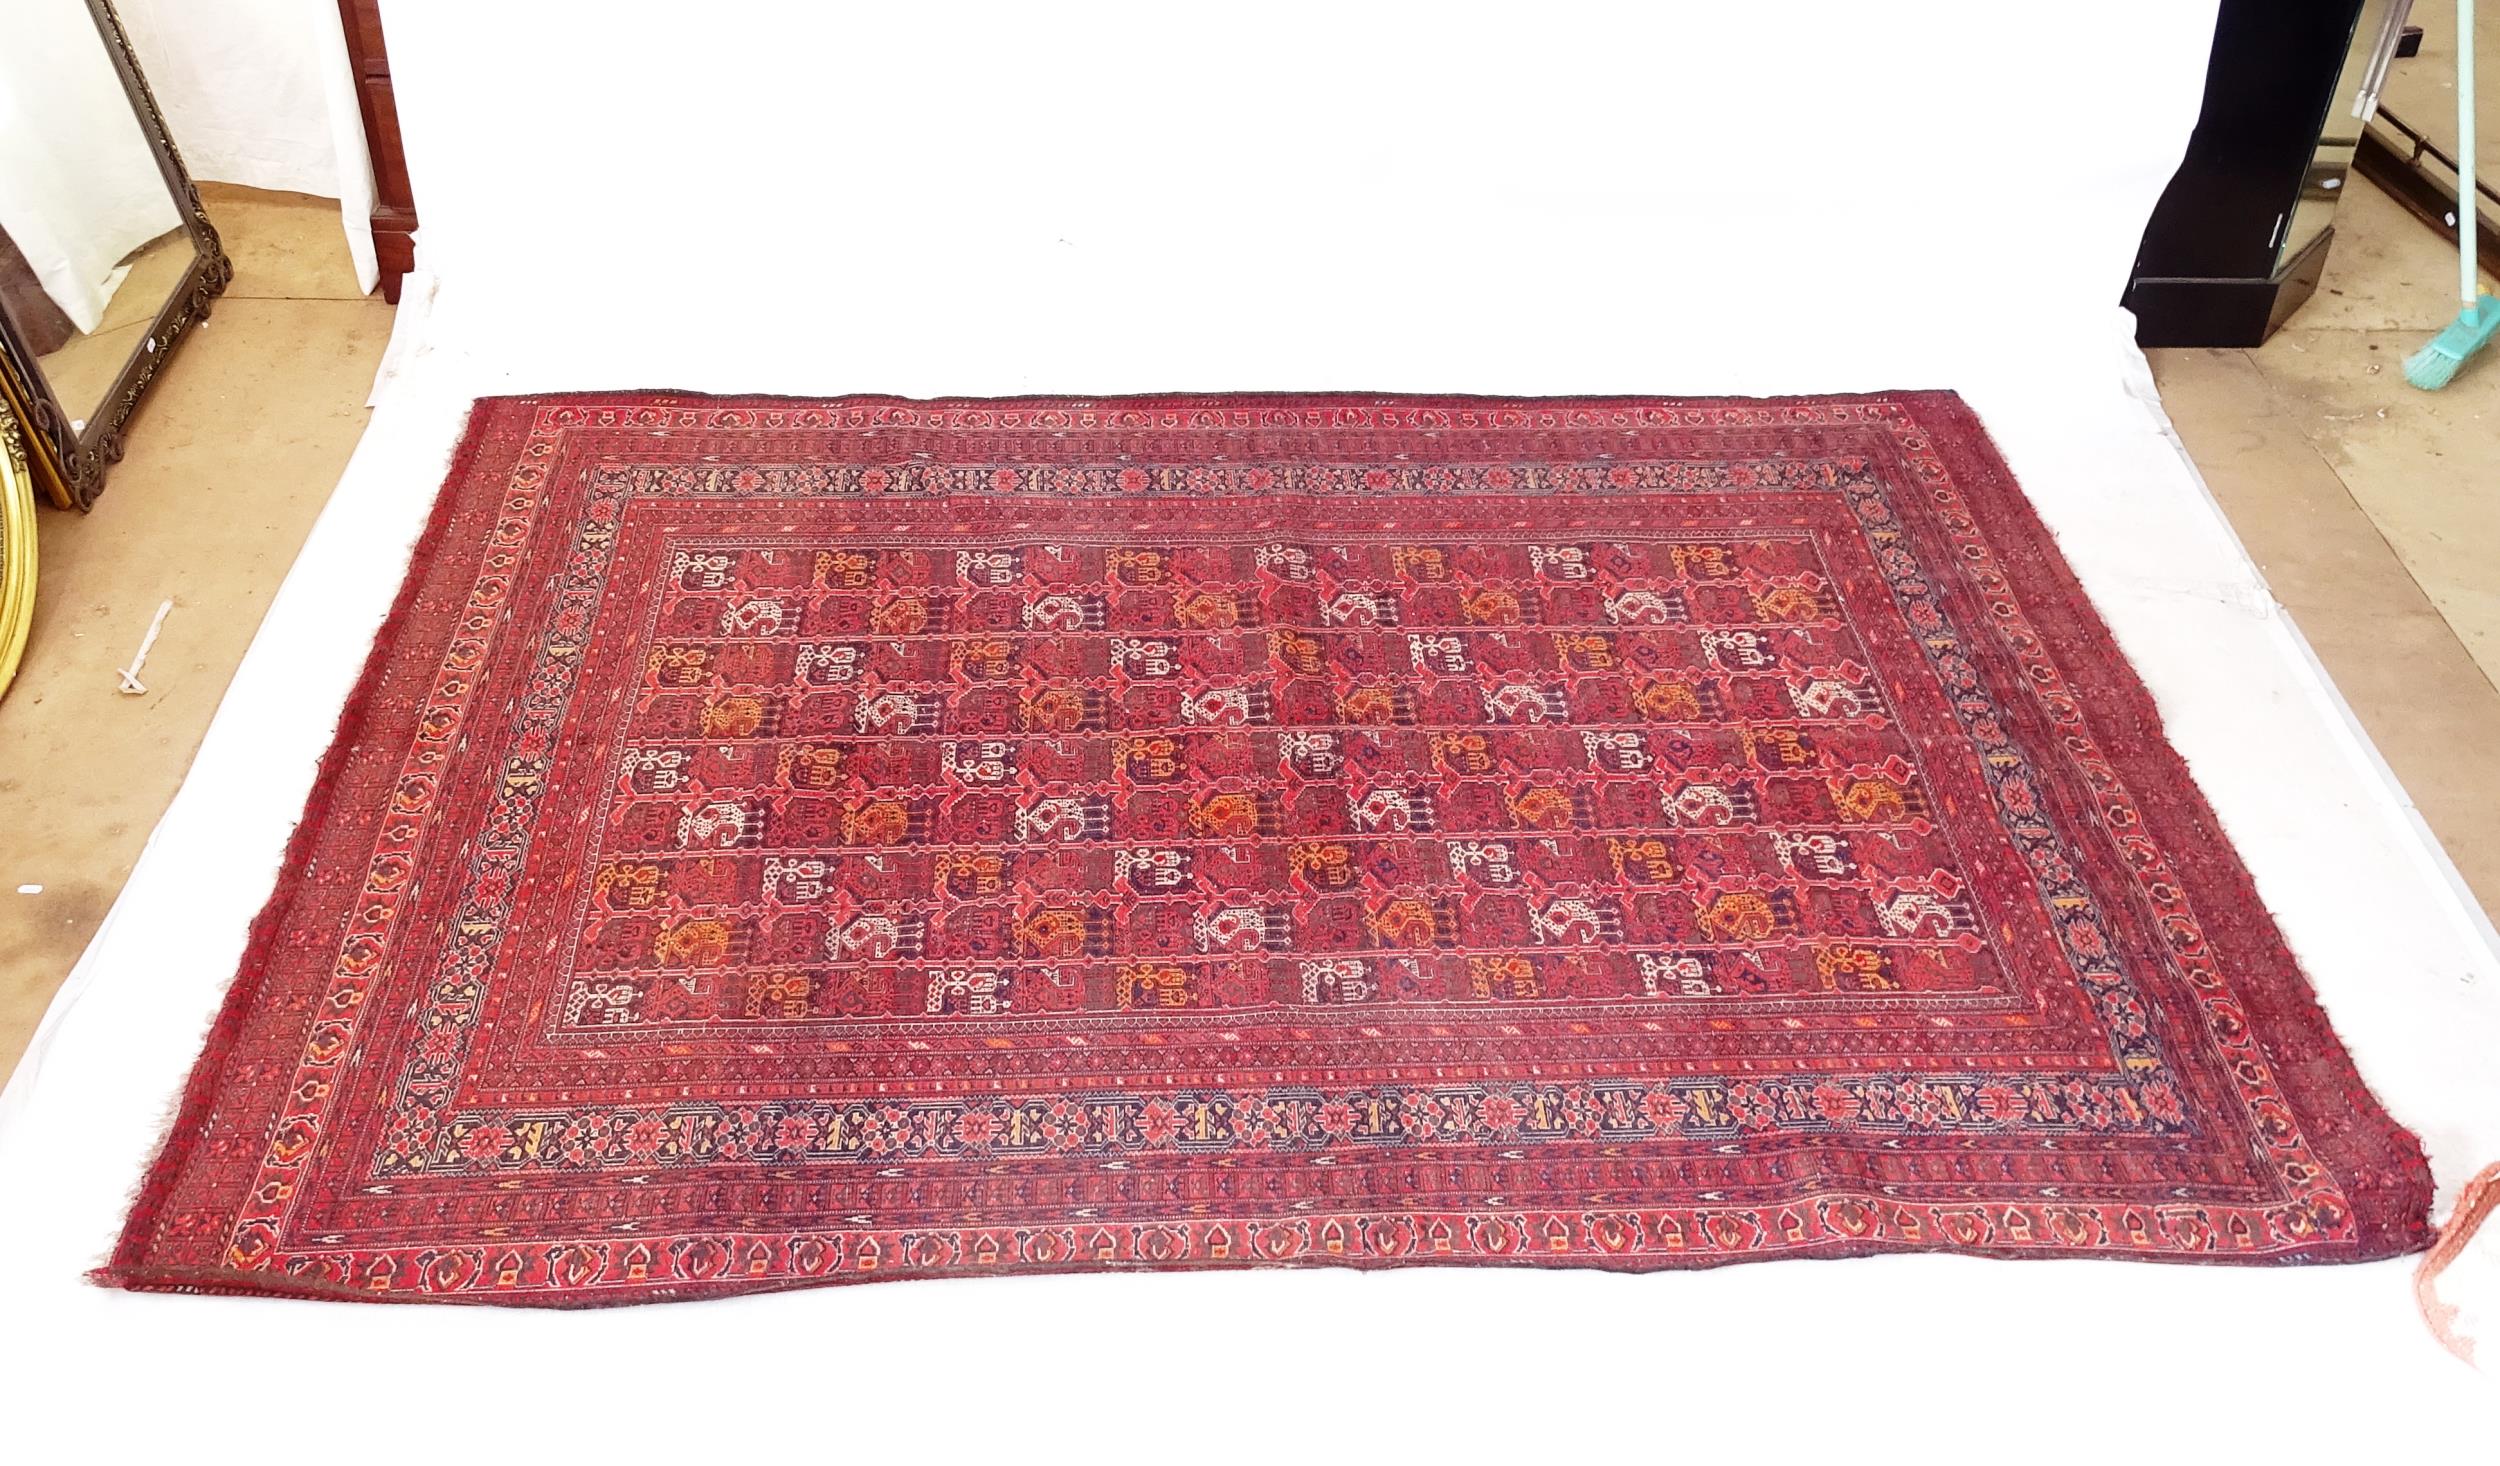 An Antique red ground Hamadan rug, 230cm x 170cm - Image 2 of 2